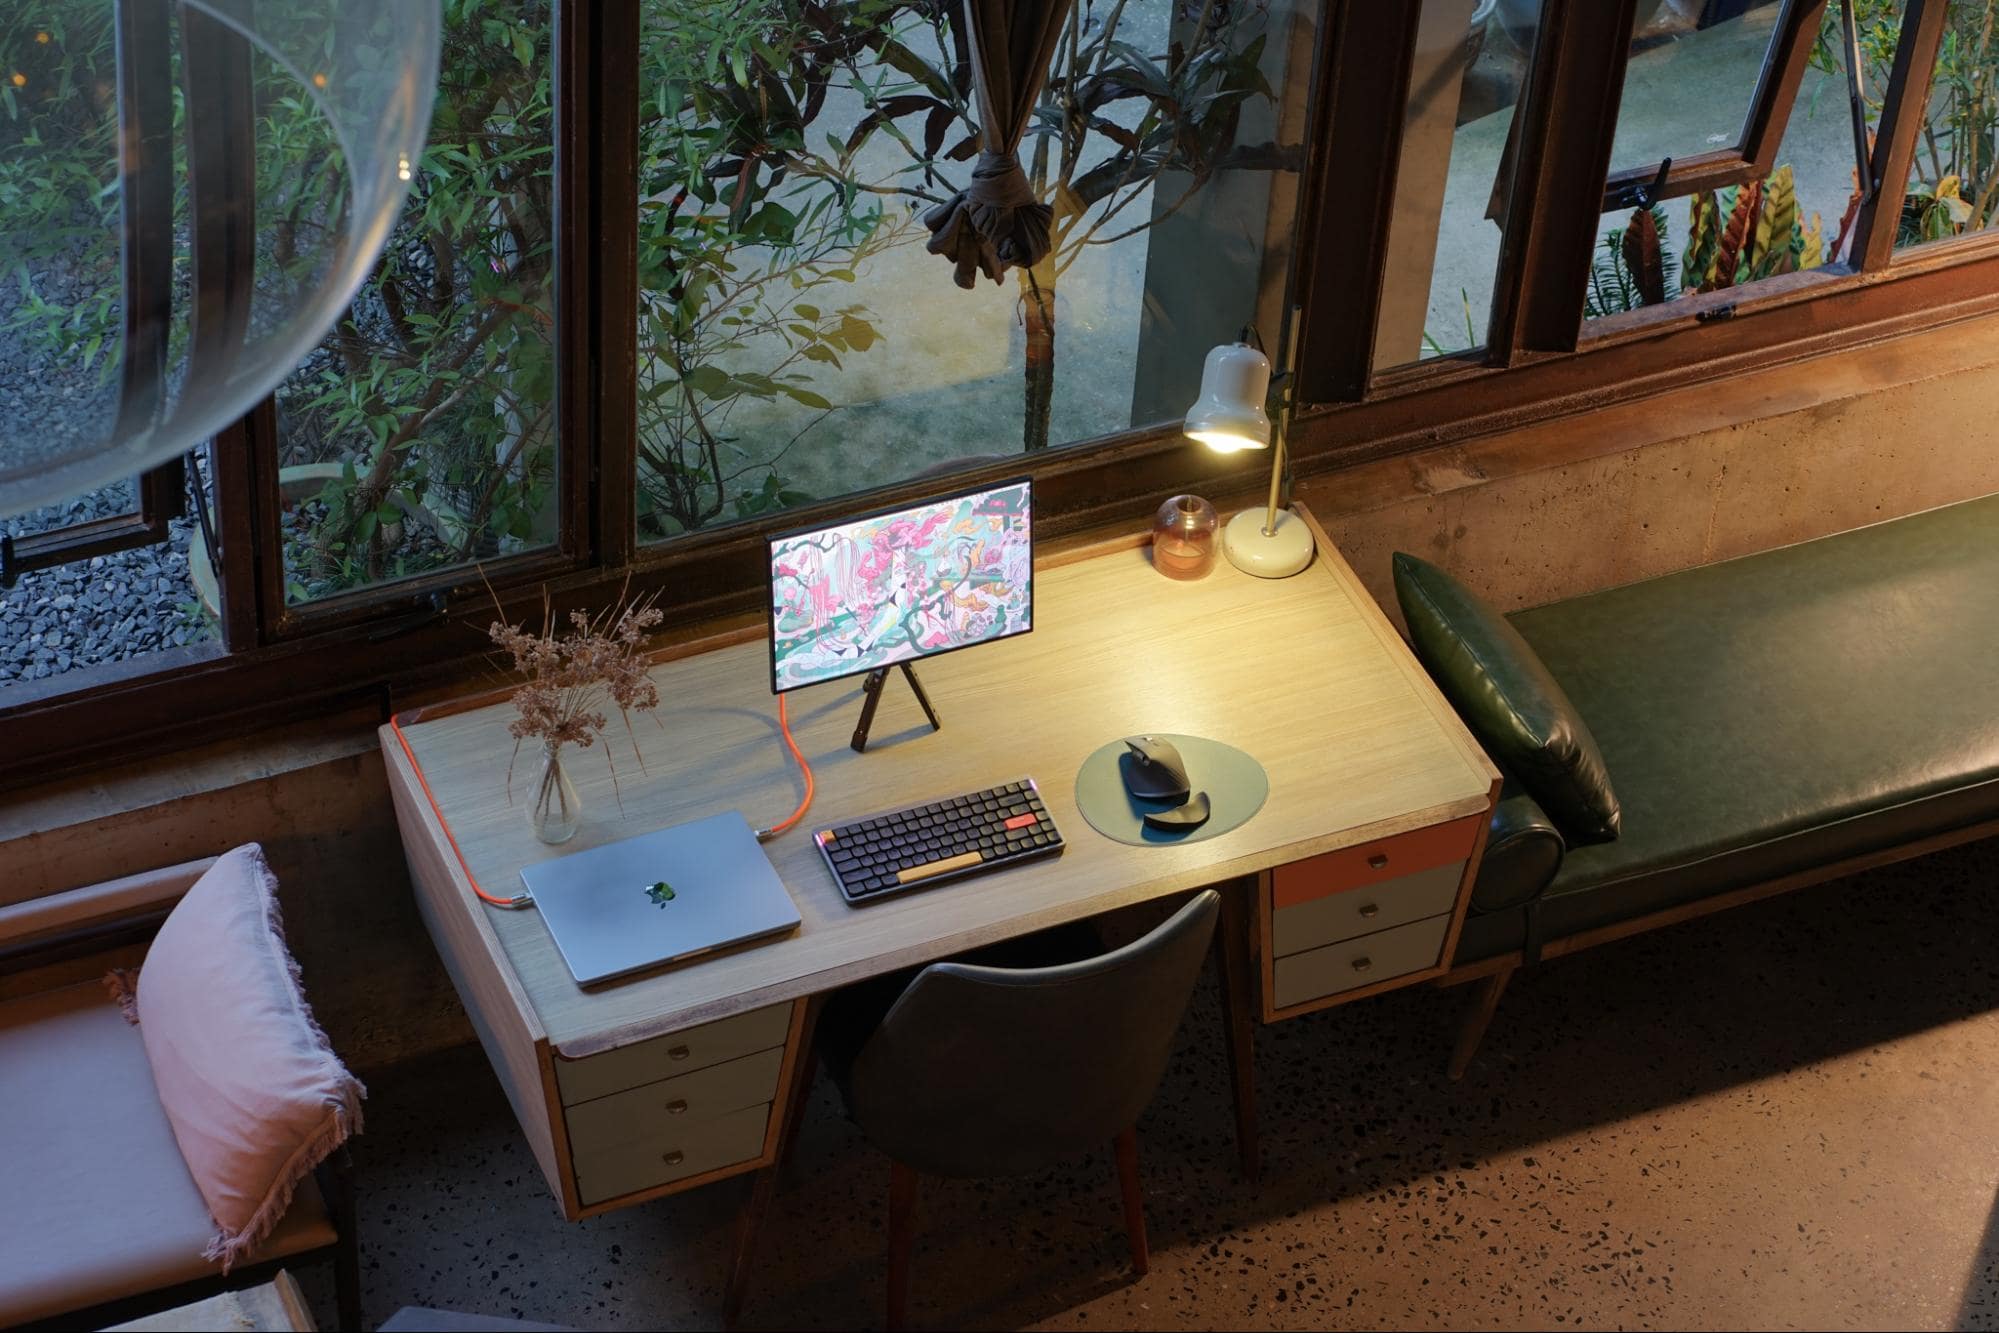 A calm and sophisticated travel desk setup